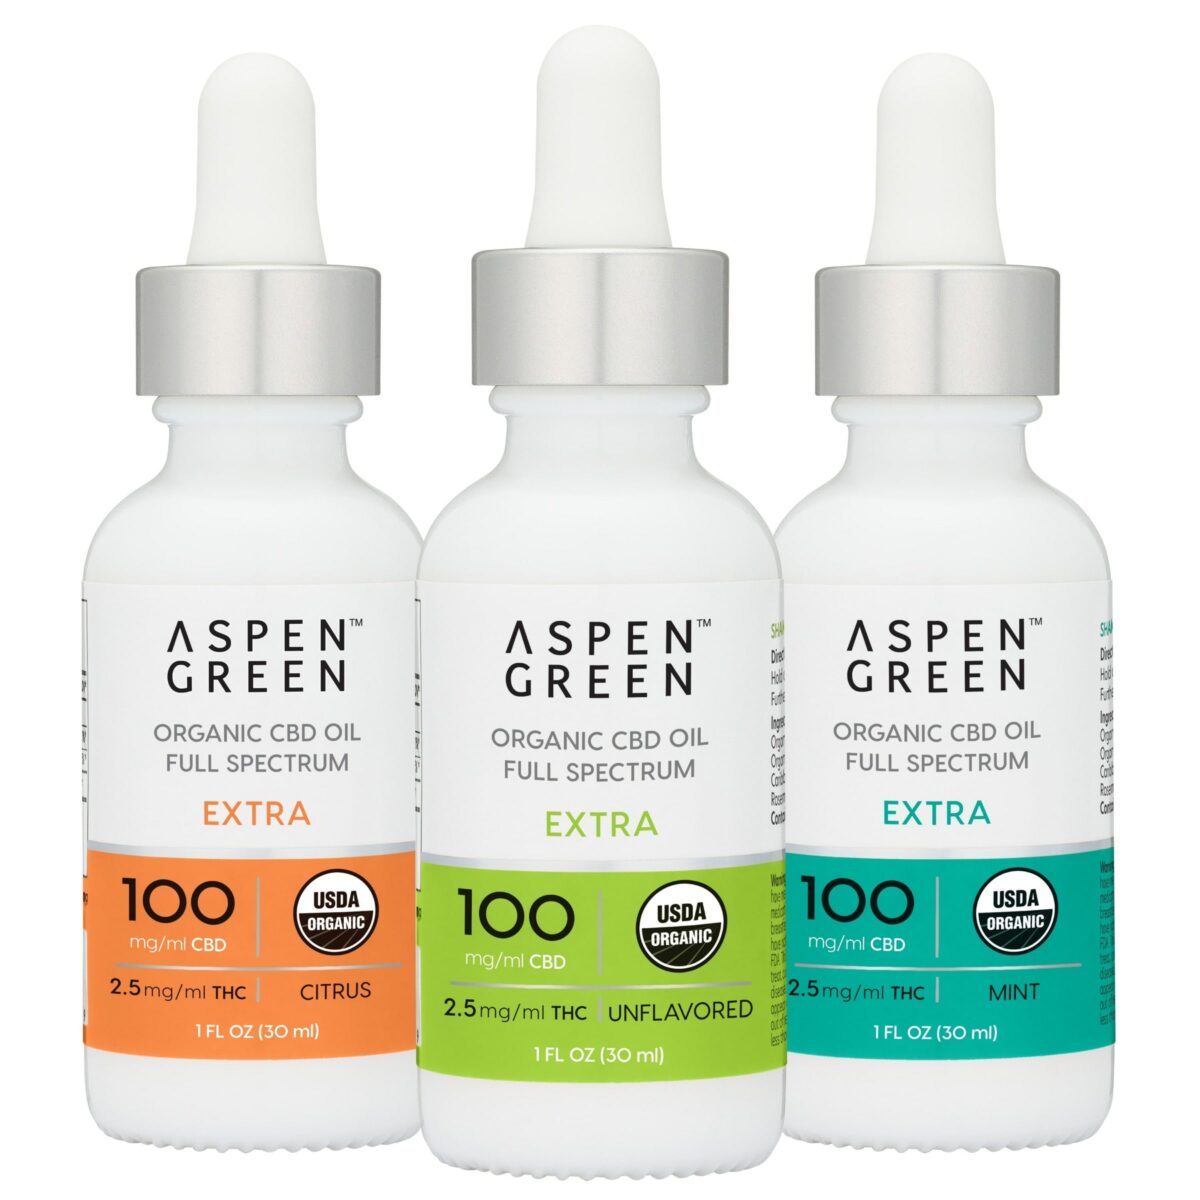 Aspen Green USDA Certified Organic CBD Oil Tinctures, Extra Strength, Variety Flavor